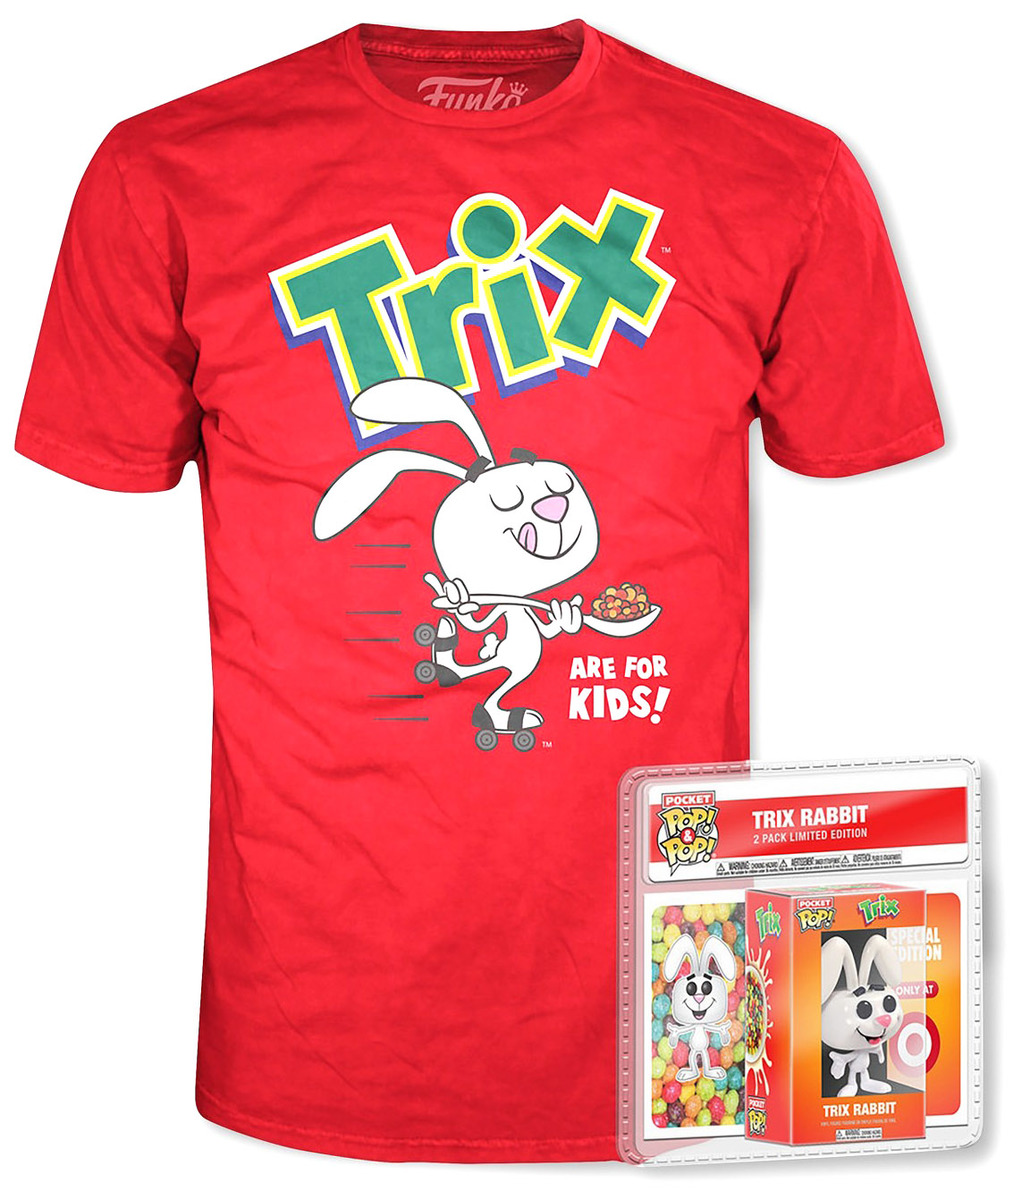 Kids limited. Trix Rabbit. Cocoa Puffs футболка.